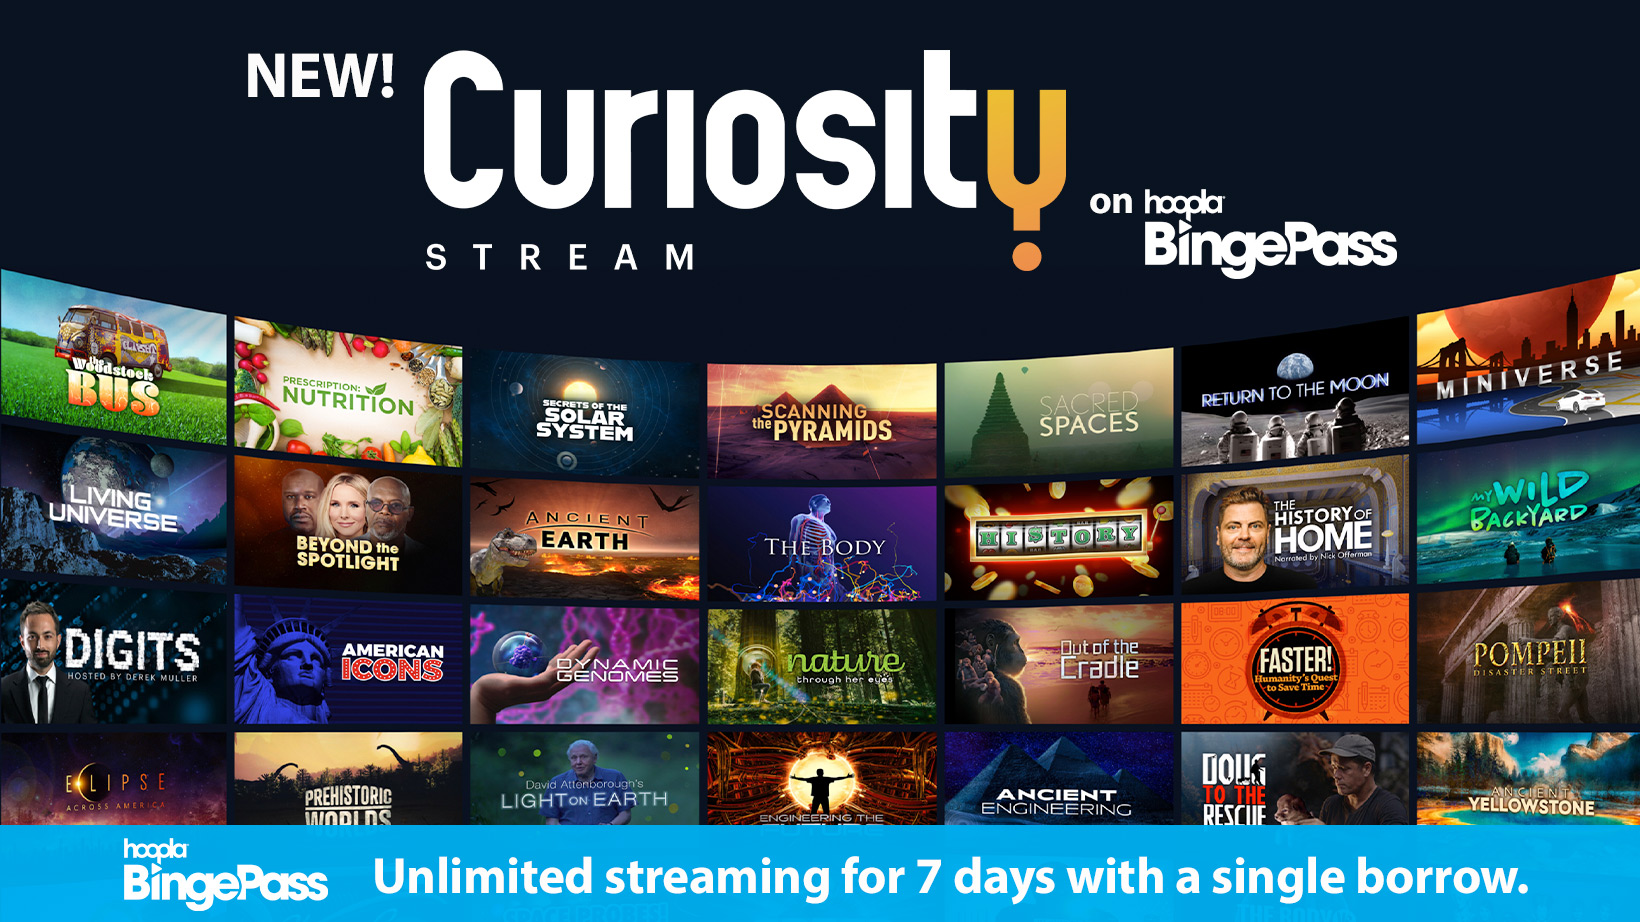 curiosity stream logo